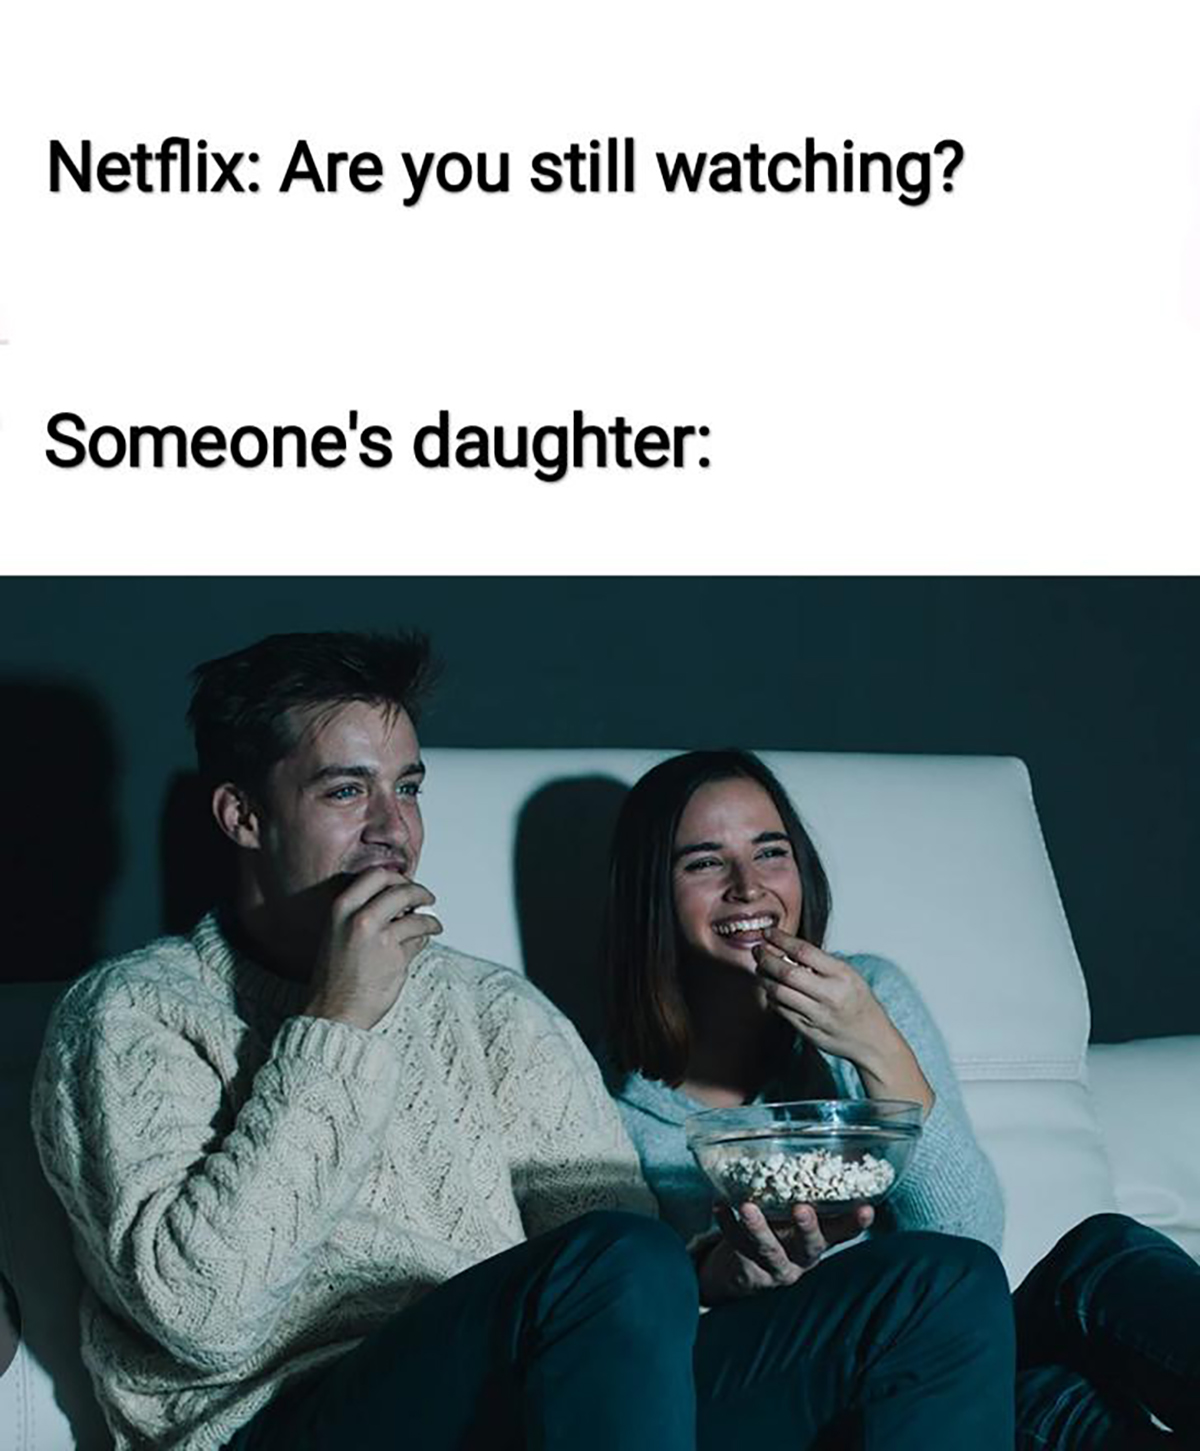 human behavior - Netflix Are you still watching? Someone's daughter